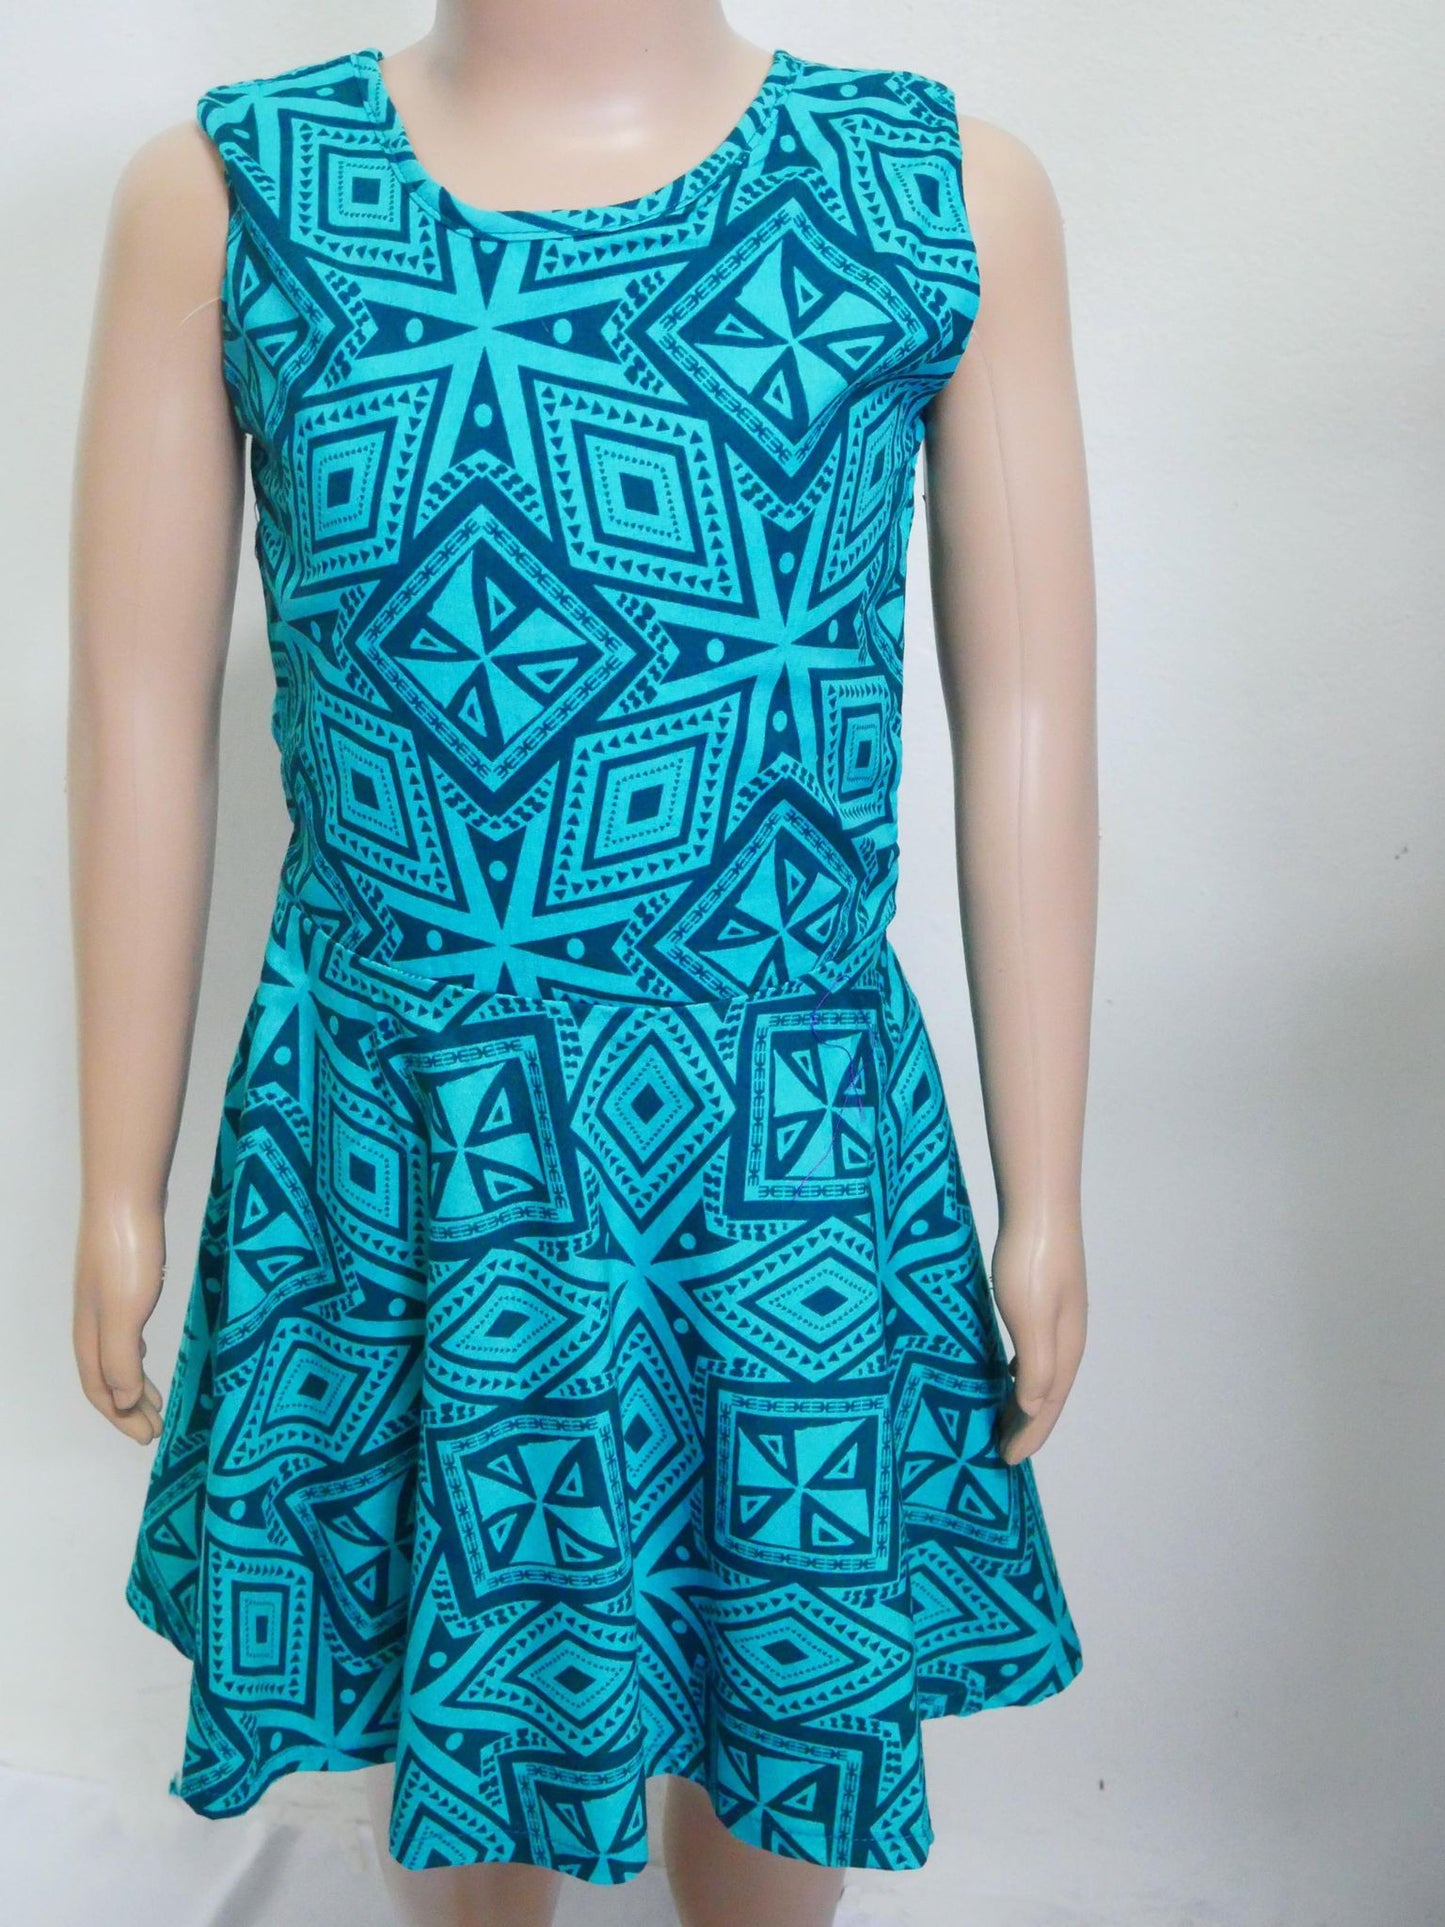 Tanoa Samoa Girl's Blue Dress (Jade Blue)